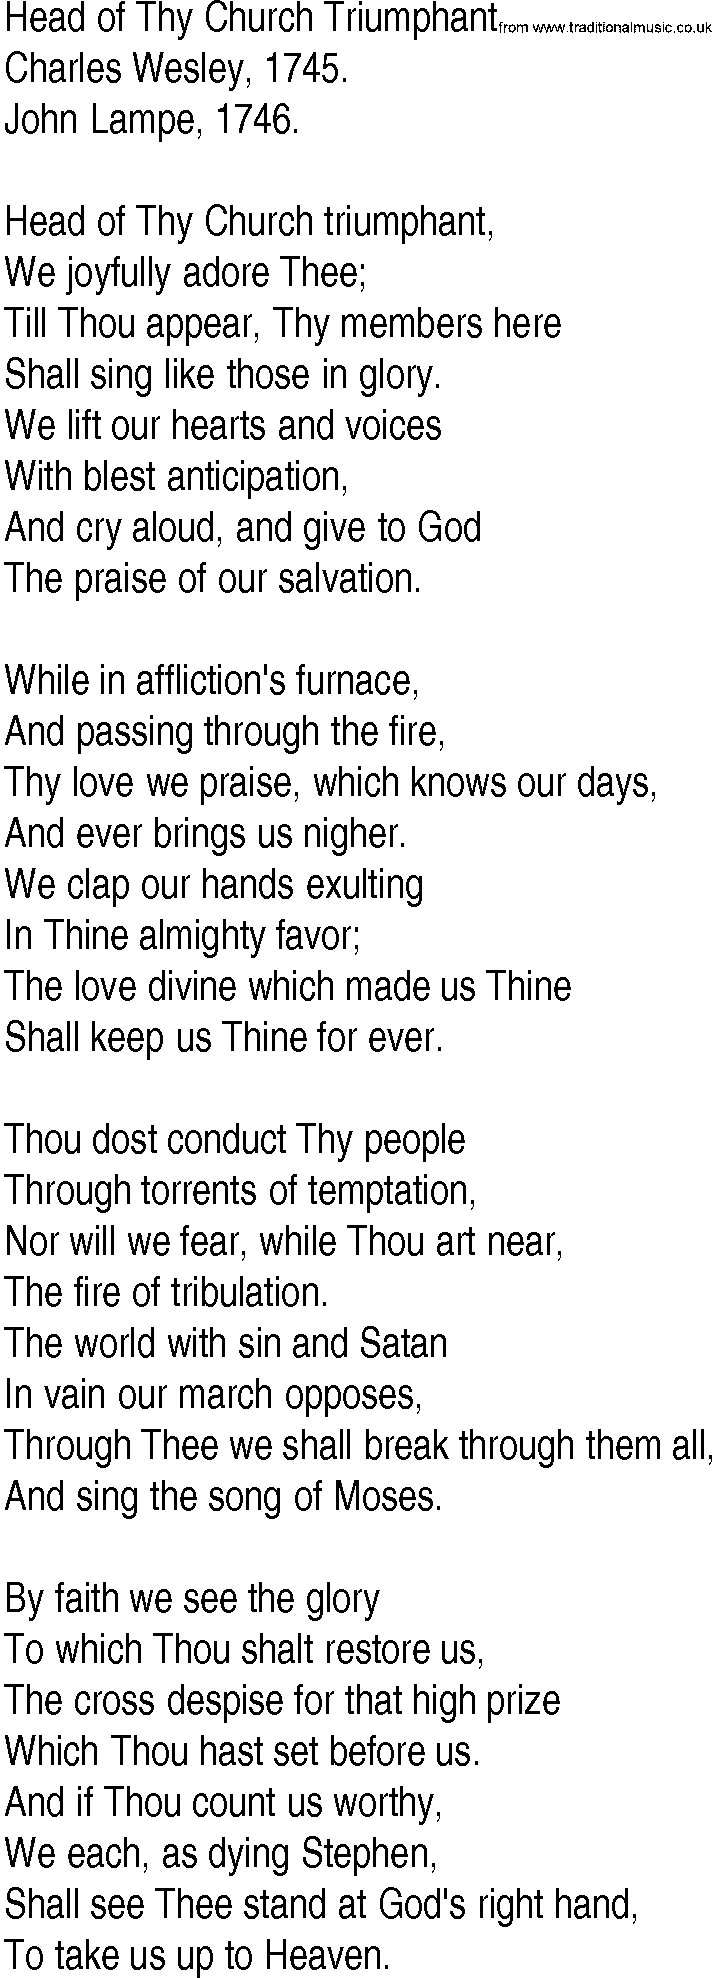 Hymn and Gospel Song: Head of Thy Church Triumphant by Charles Wesley lyrics